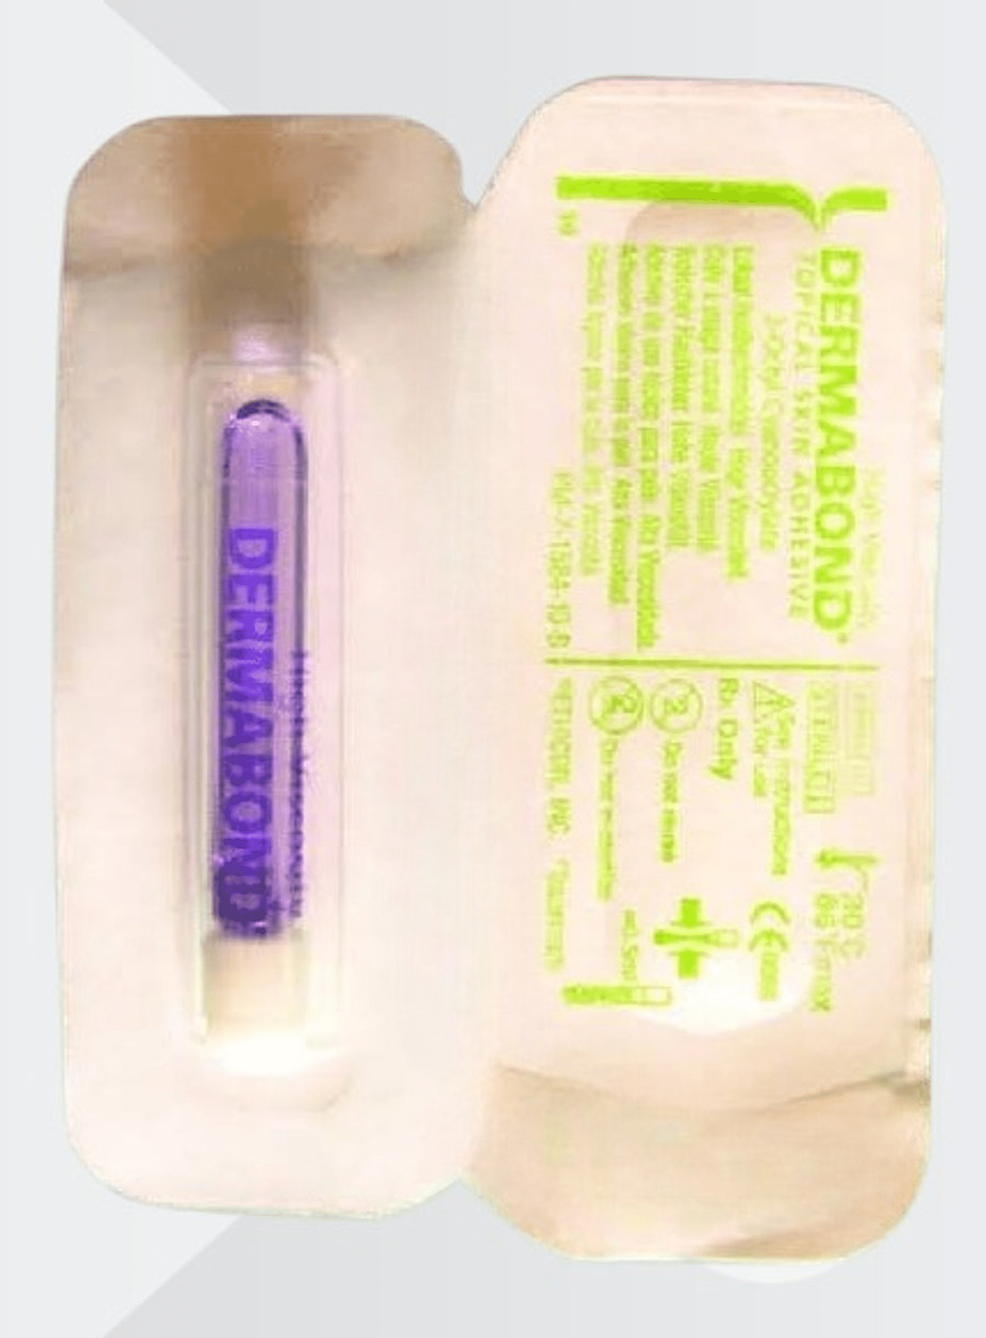 2-Octyl Cyanoacrylate (Dermabond) Wound Adhesives: Product, Design